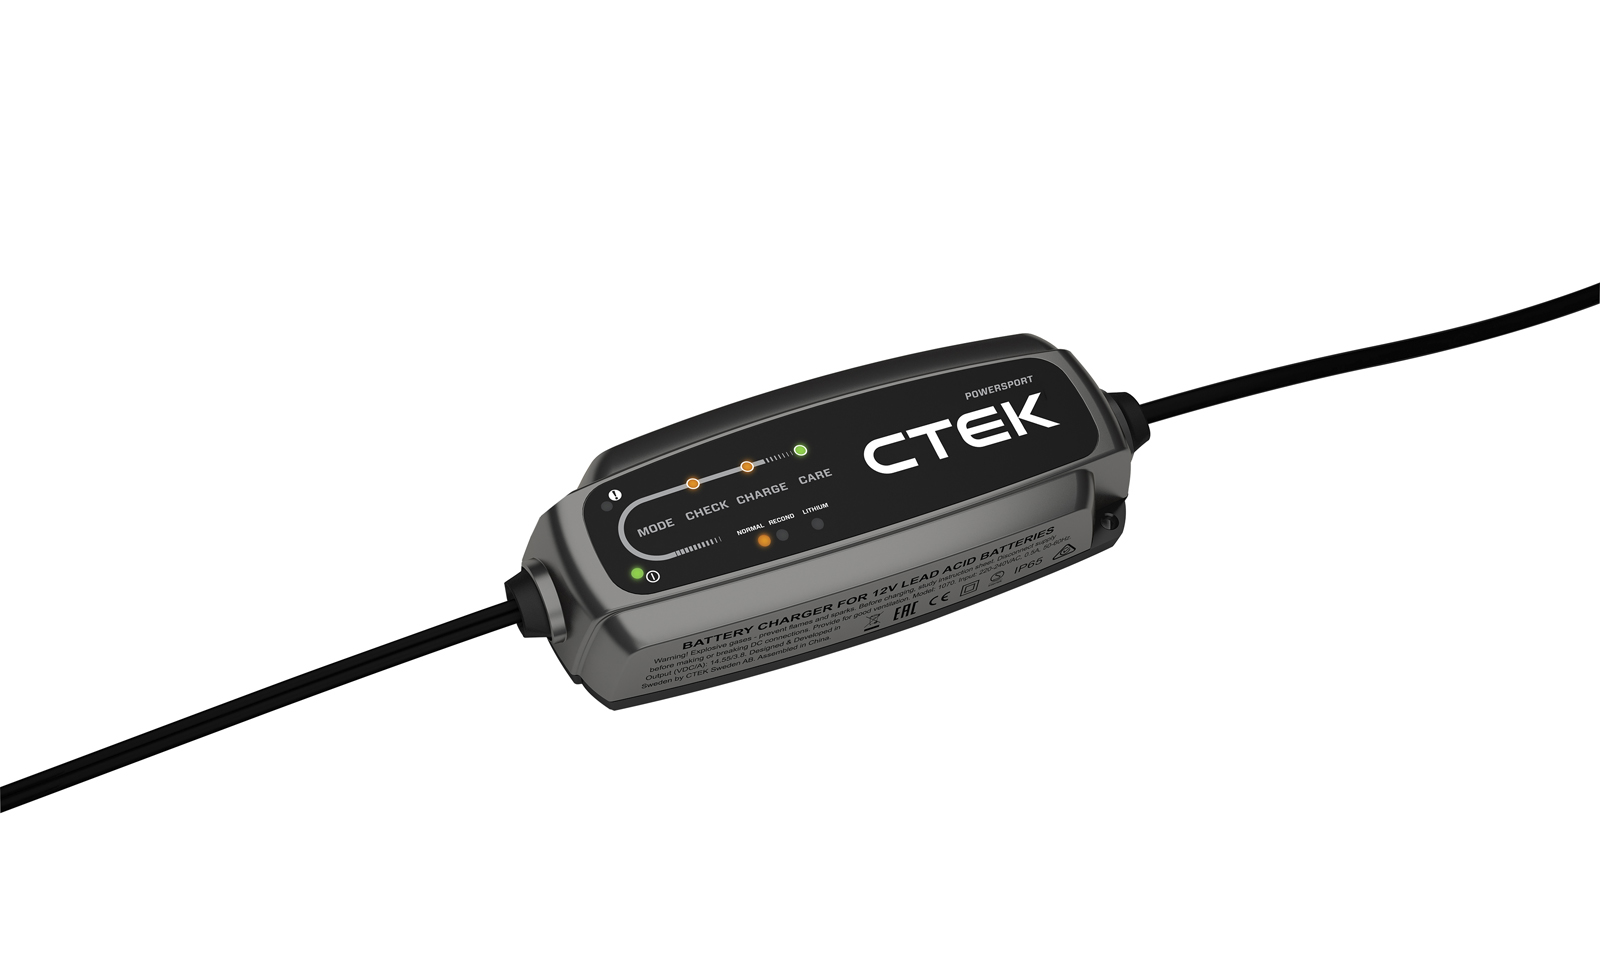 CTEK CTEK Batterien für Blei-und Ladegerät LA POWERSPORT 12V 45778 Ladegerät Schwarz Volt, Litihuim Universal, LITHIUM Ah, 12 and EU, CT5